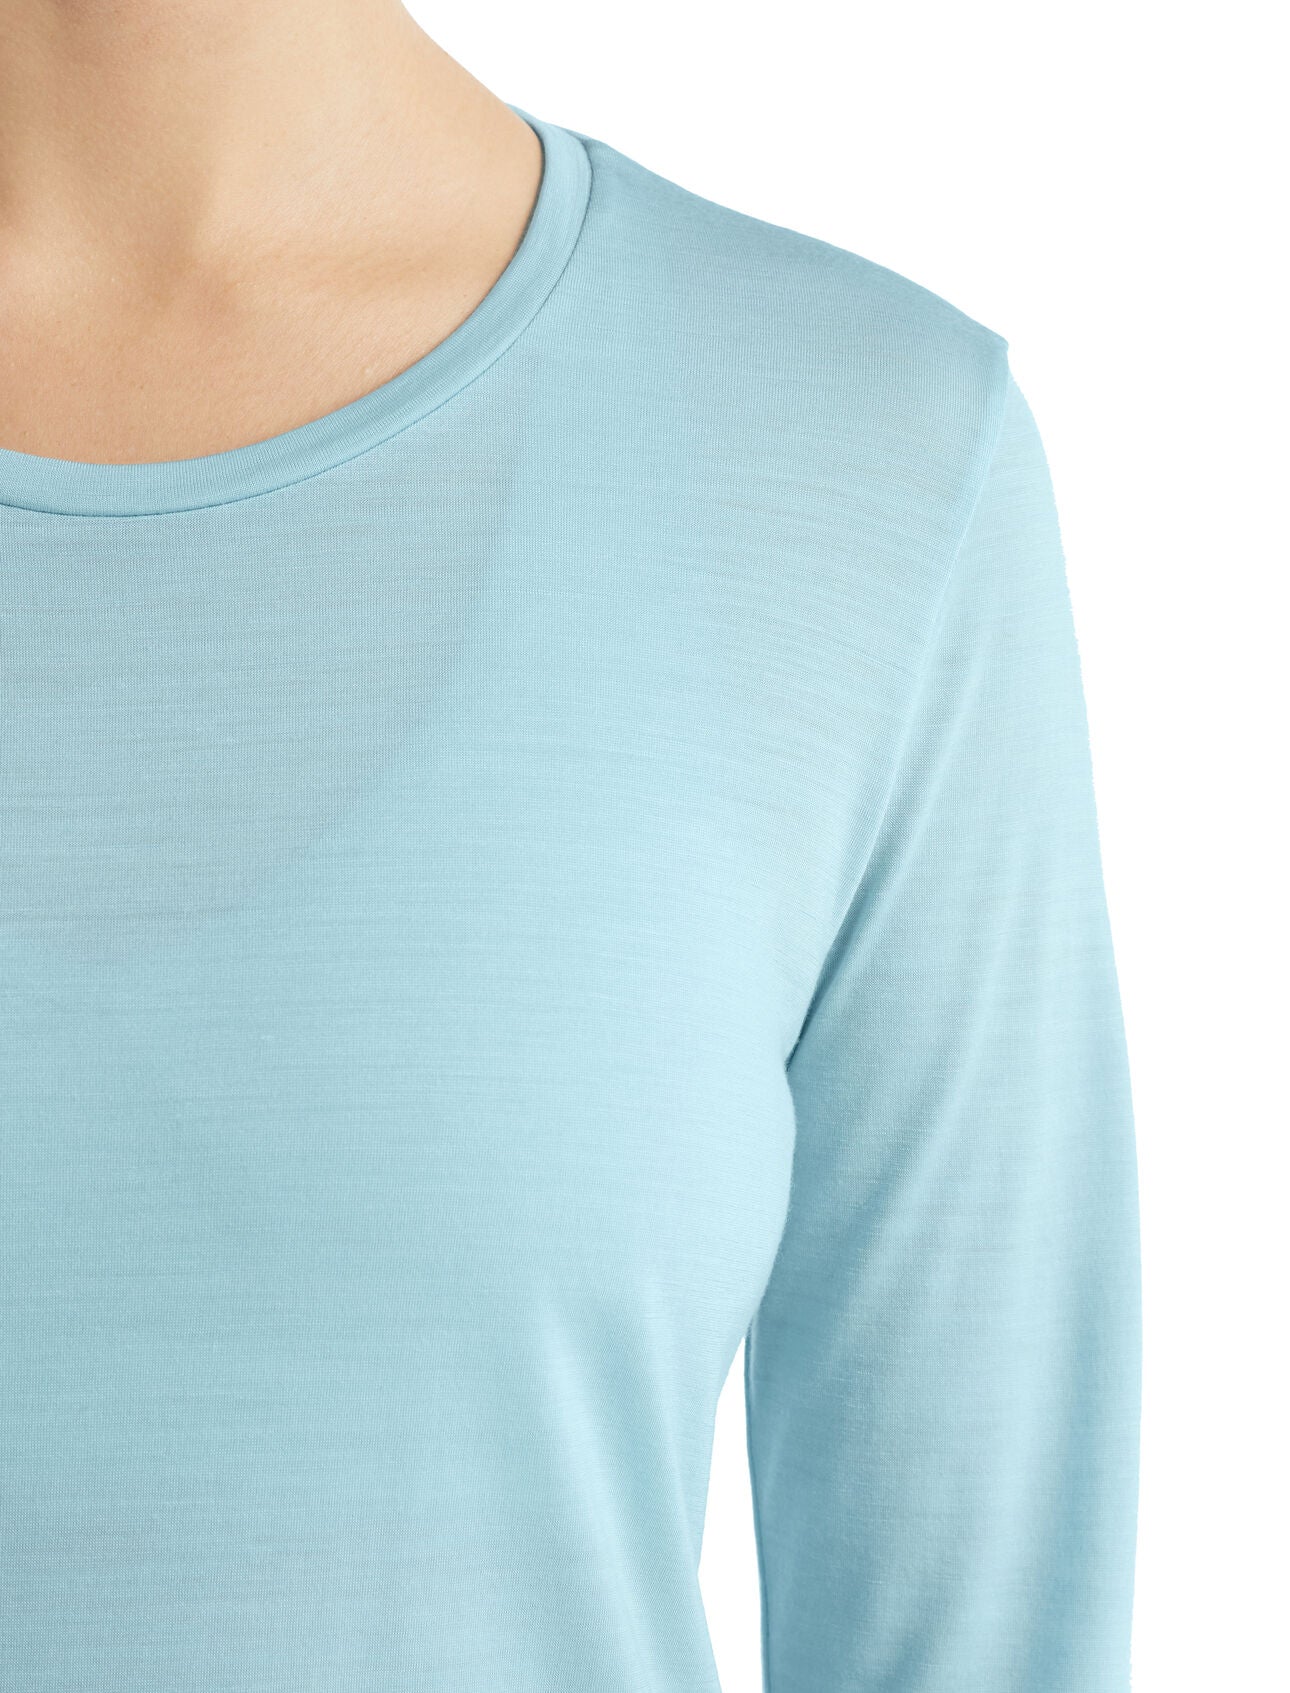 Icebreaker Women's Merino Sphere II Long Sleeve T-Shirt